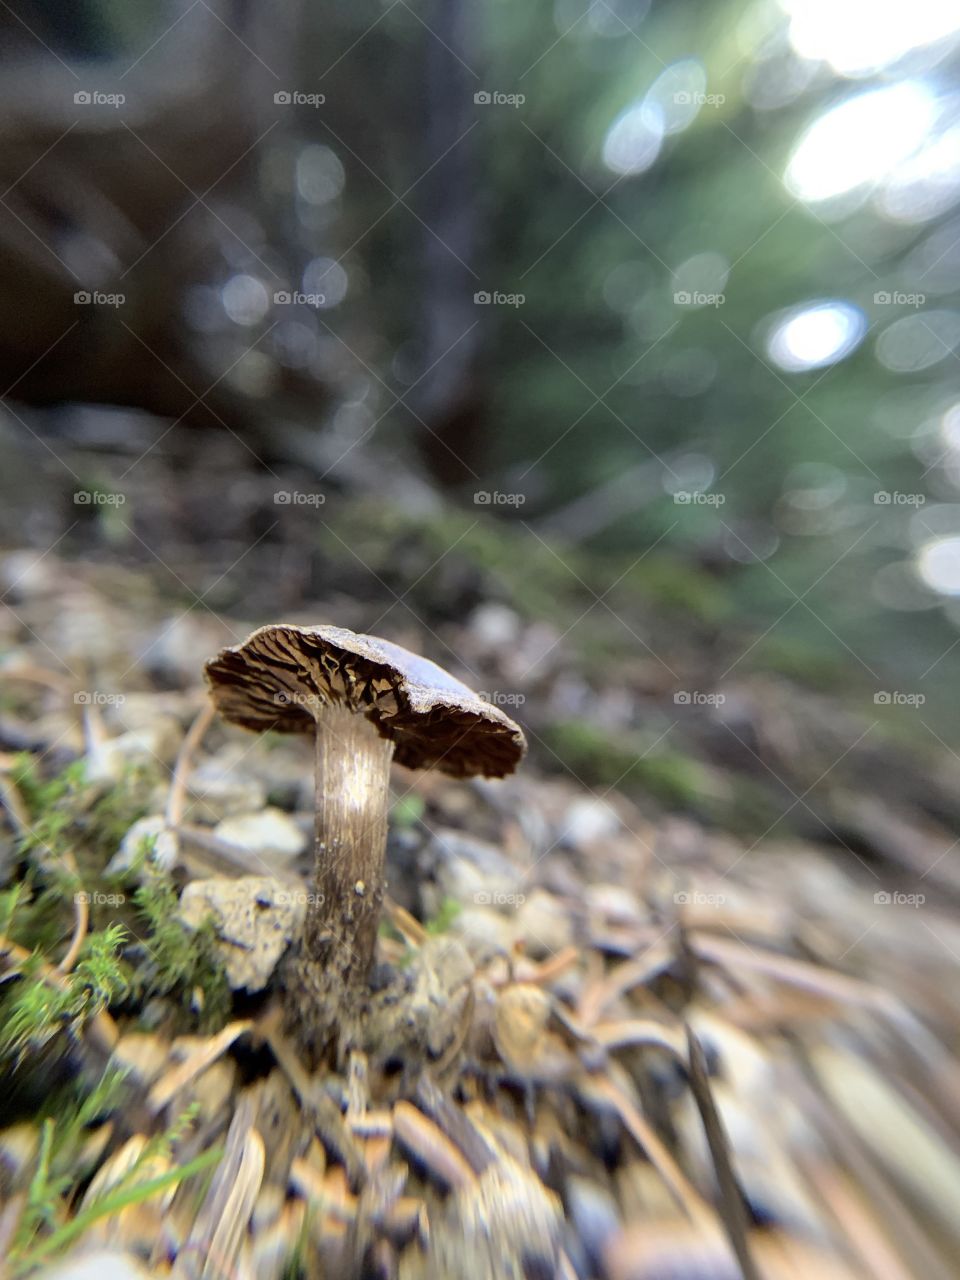 Warped mushroom 